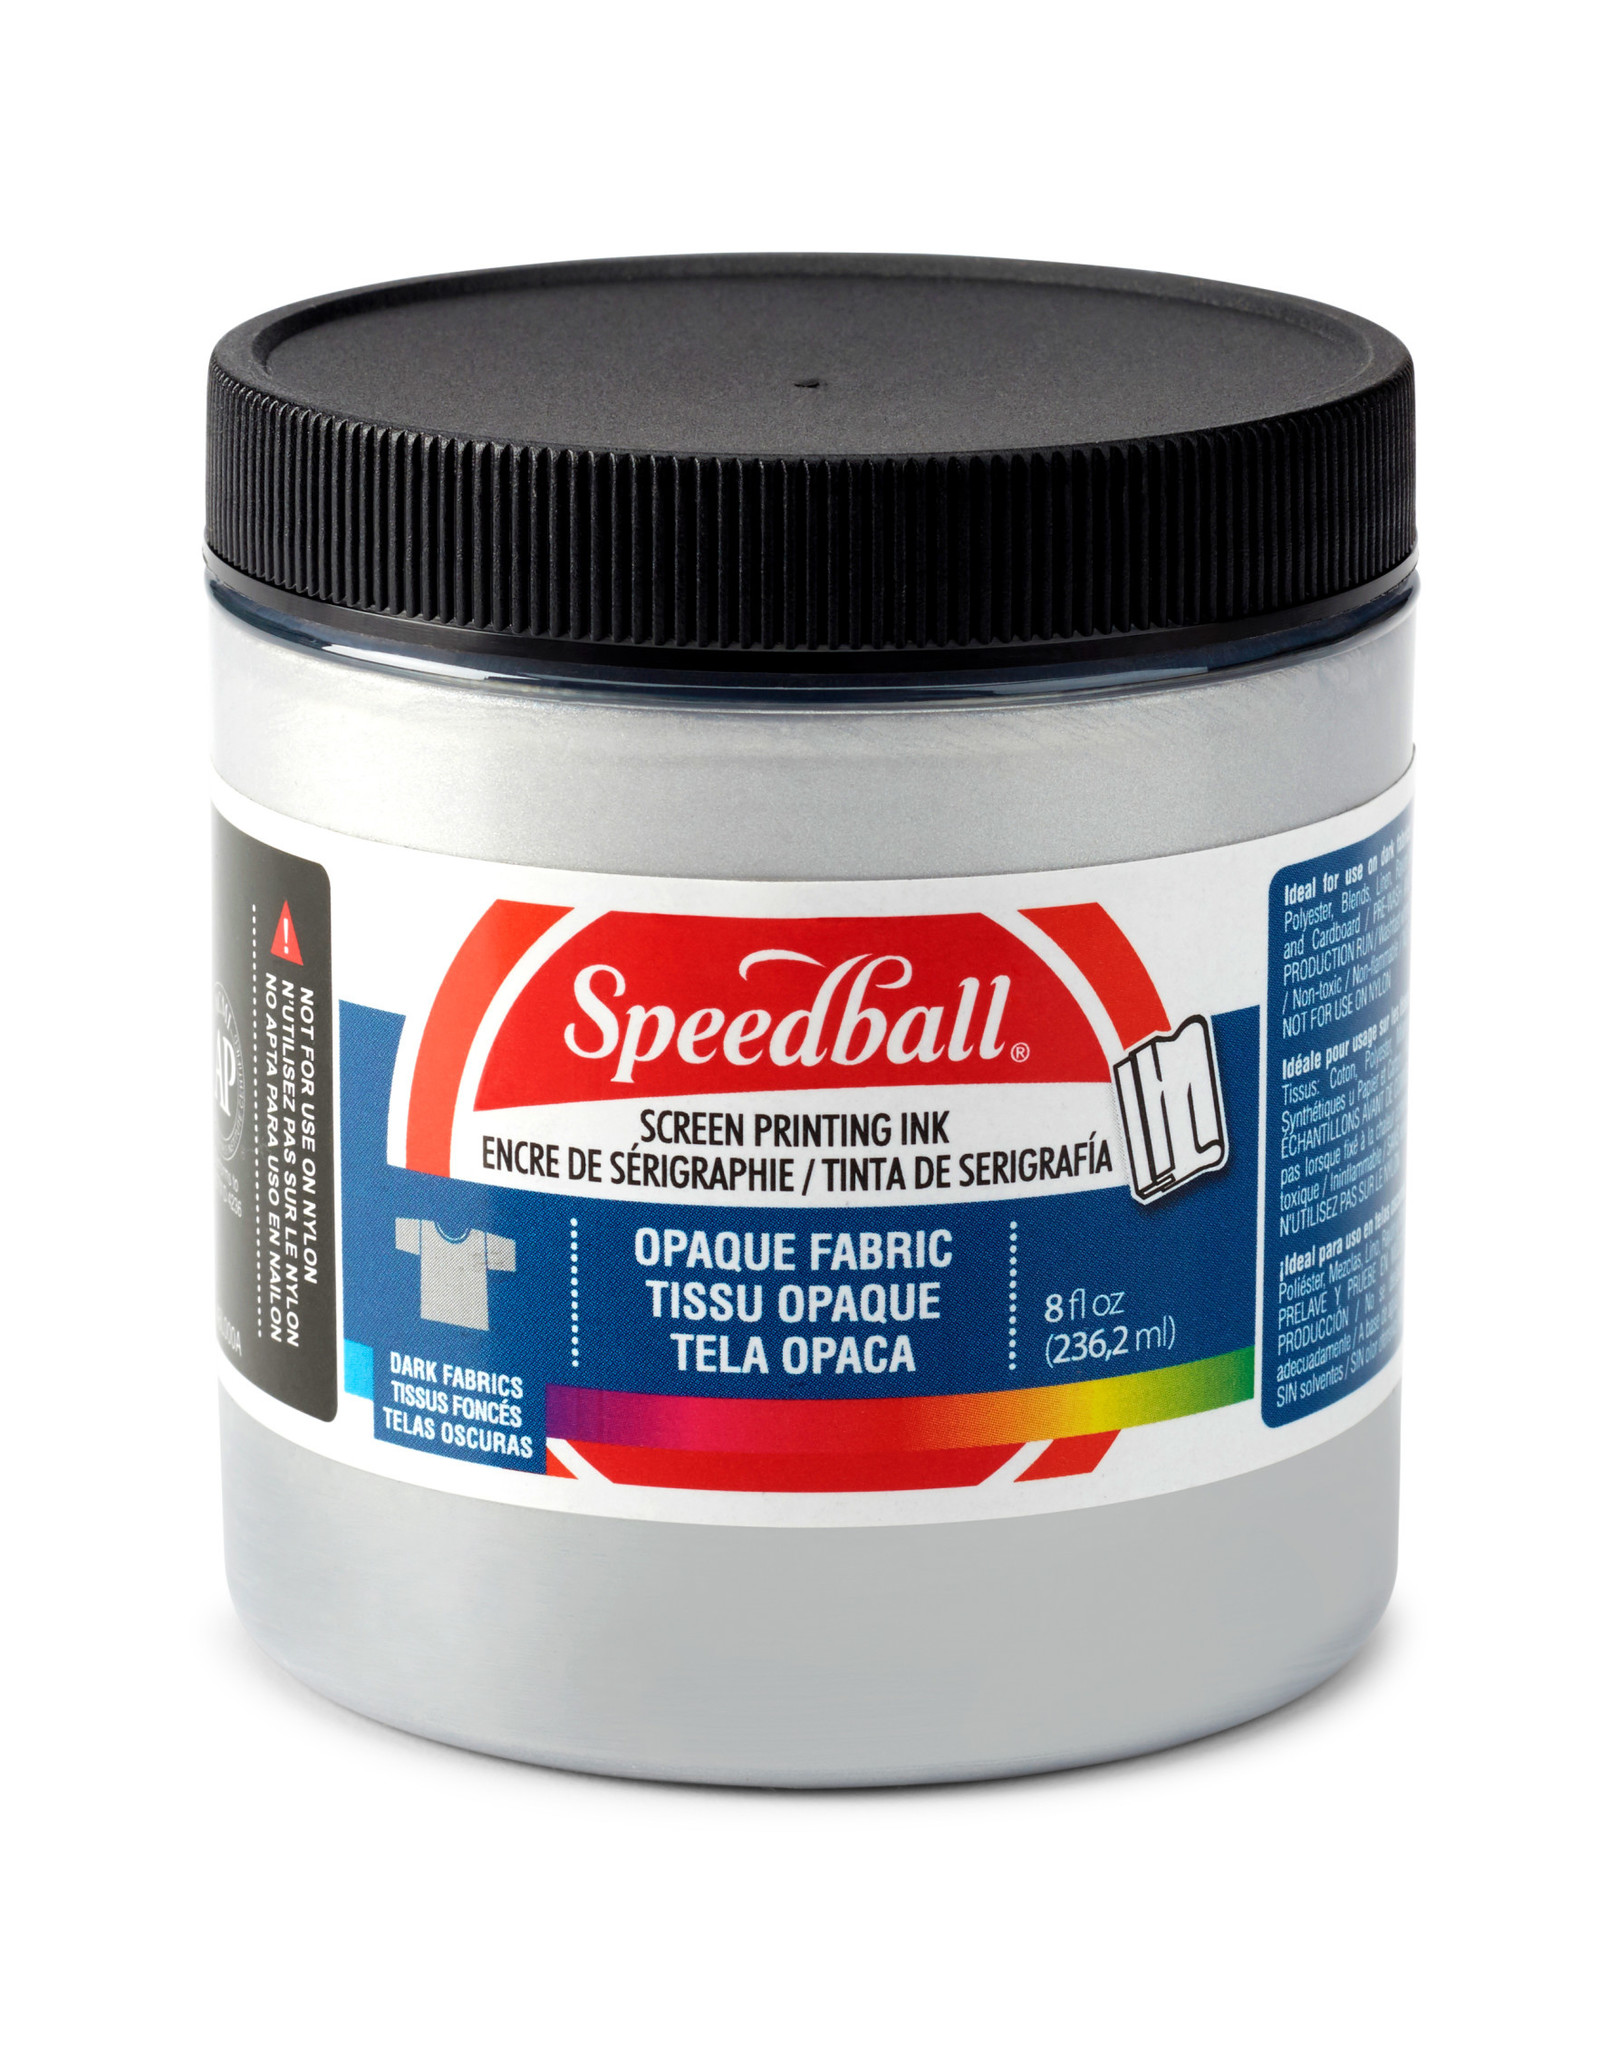 SPEEDBALL ART PRODUCTS Speedball Fabric Screen Printing Ink, Opaque Silver, 8oz